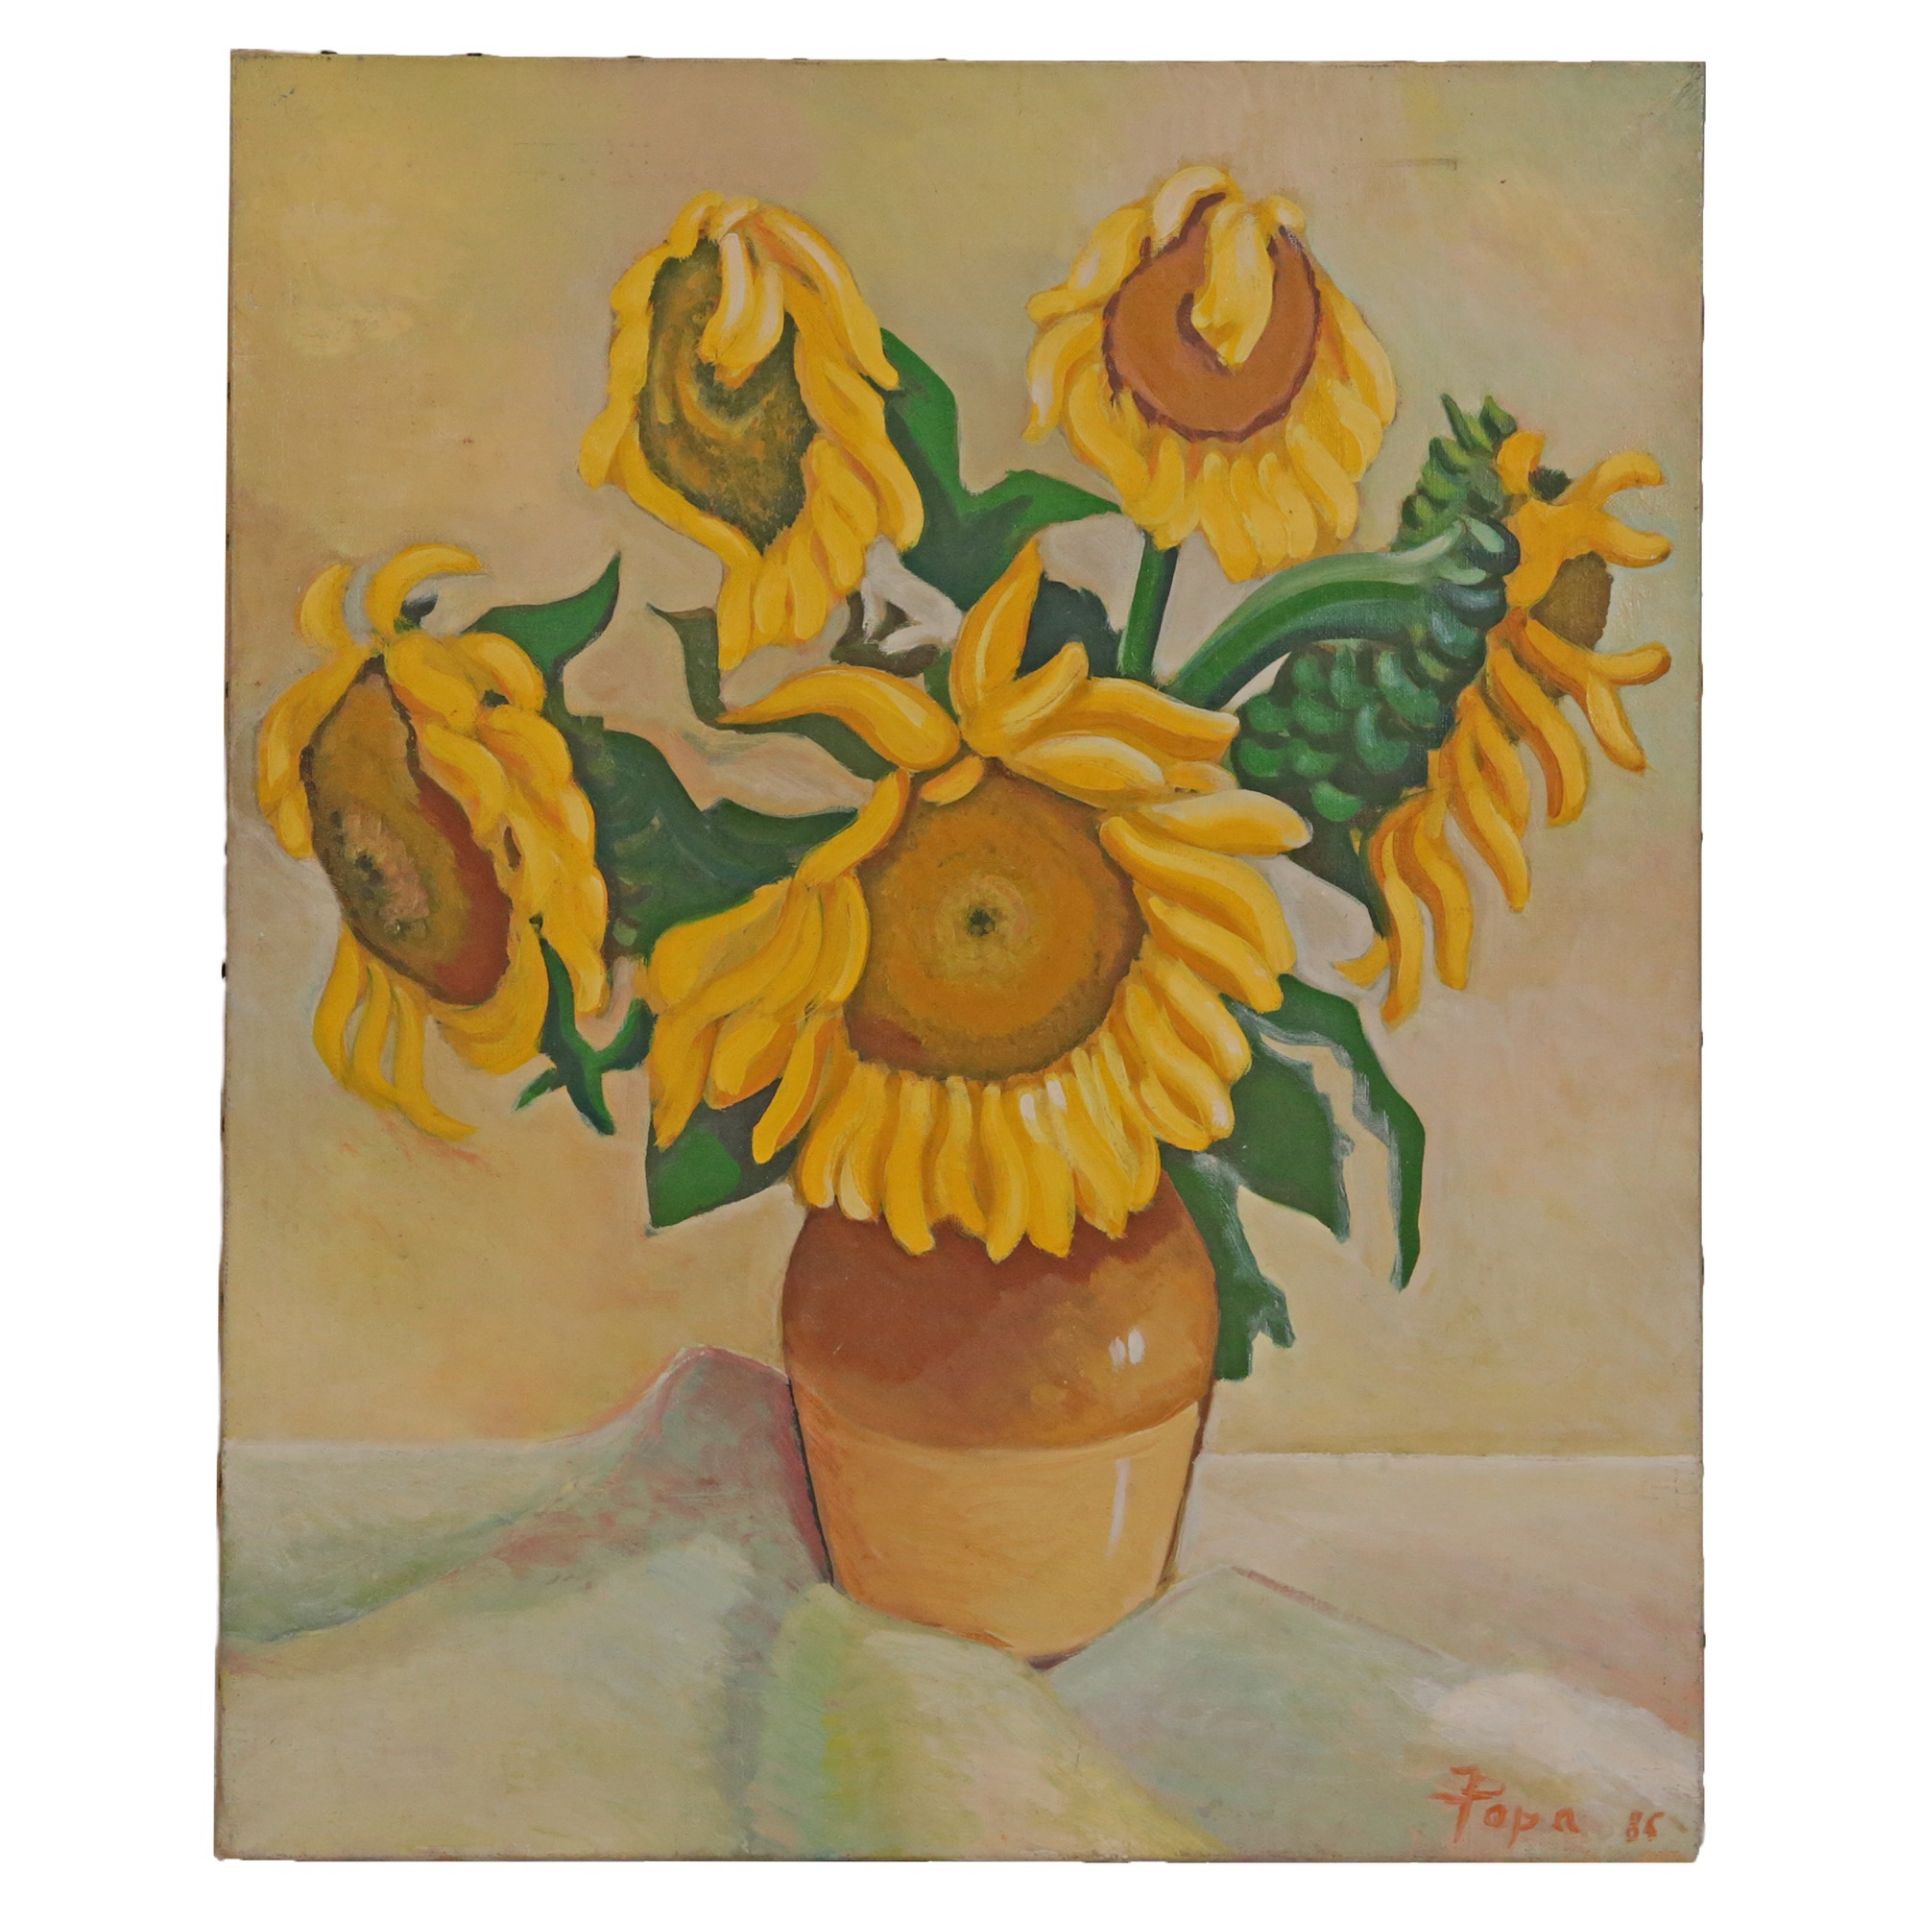 Vally POPA "Still life with sunflowers", oil on canvas, 1986. - Bild 5 aus 5